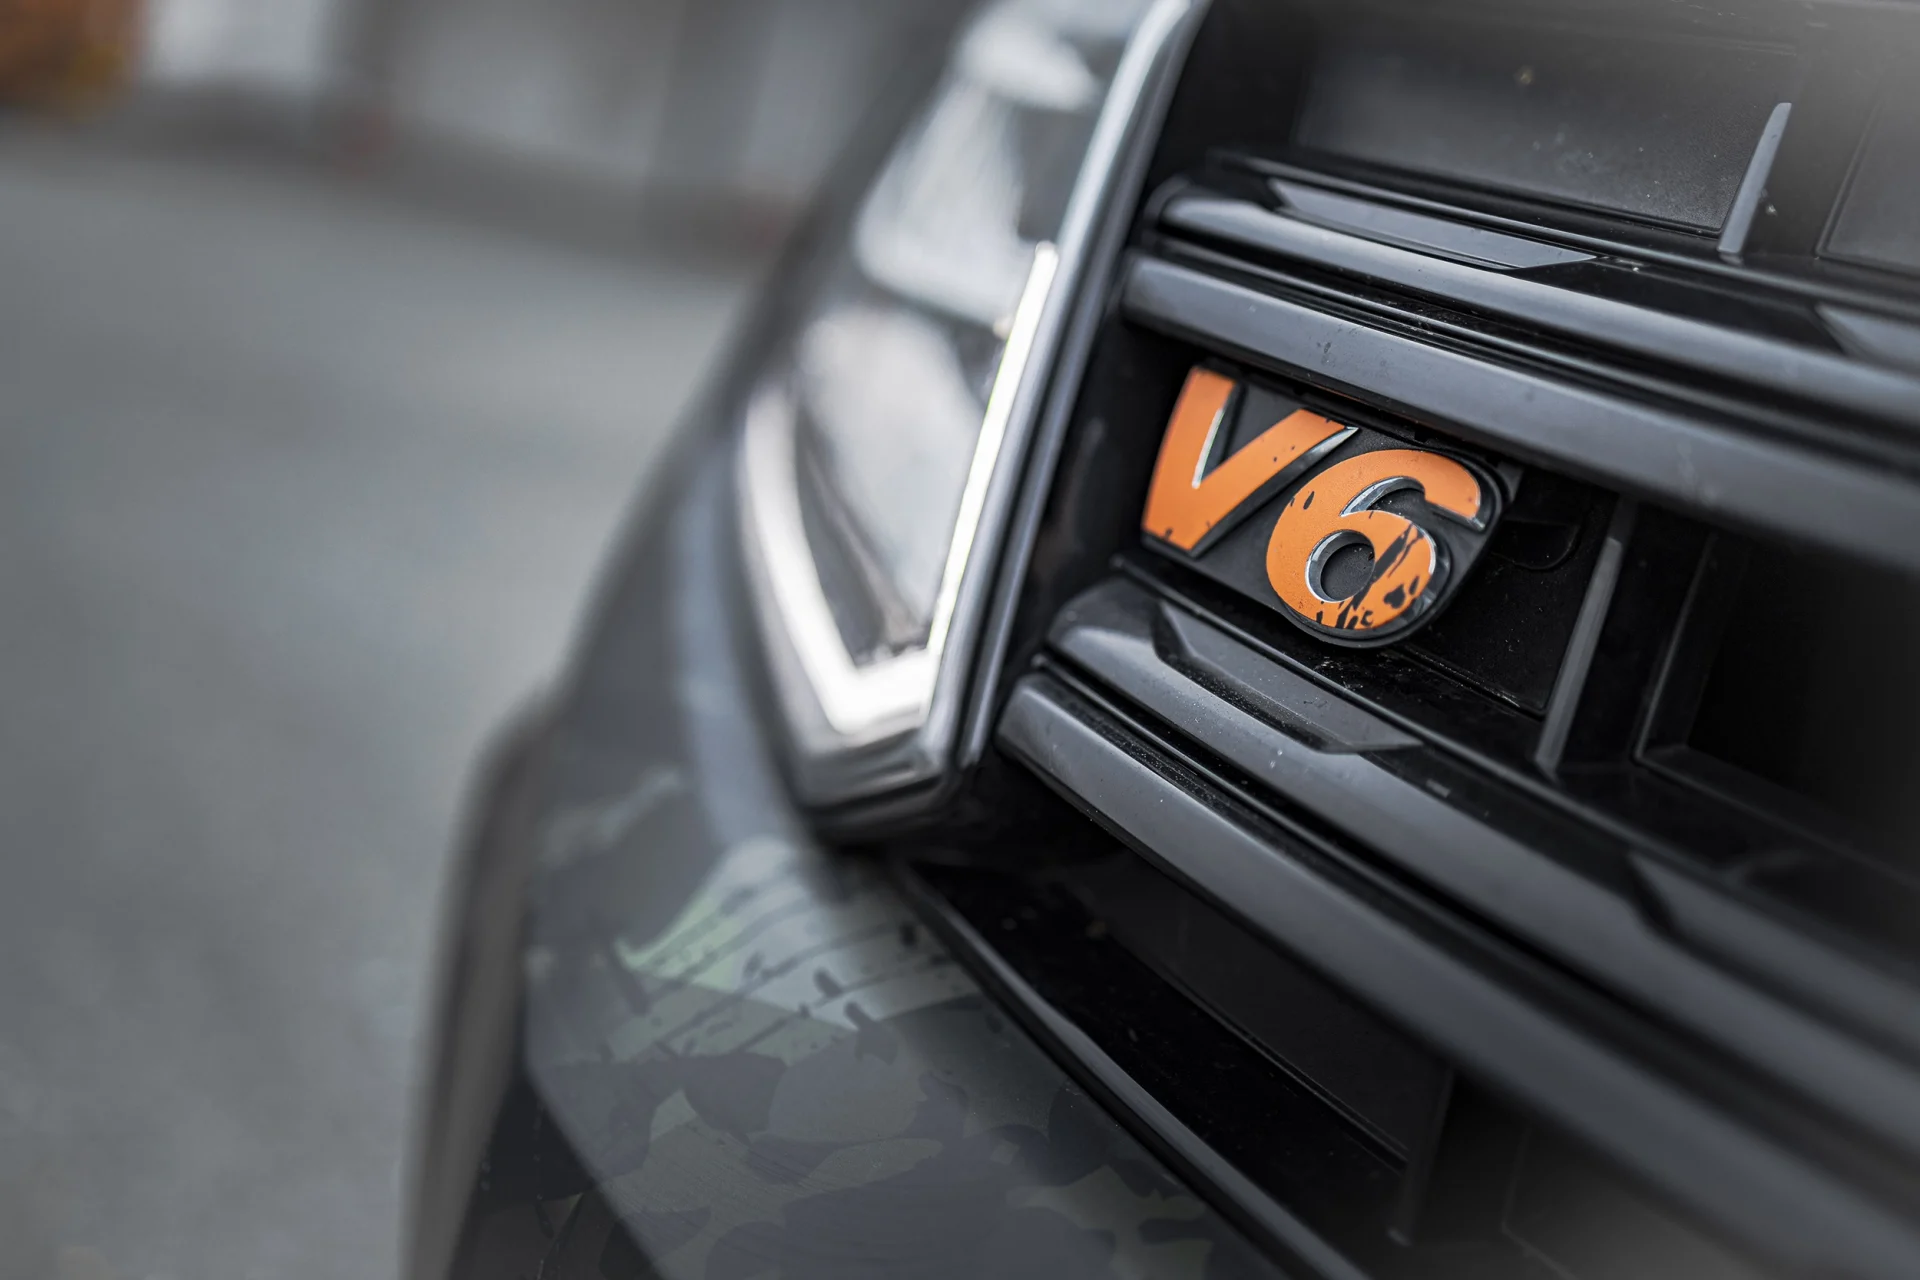 Offroad VW Amarok V6 used Look Digitaldruckfolierung